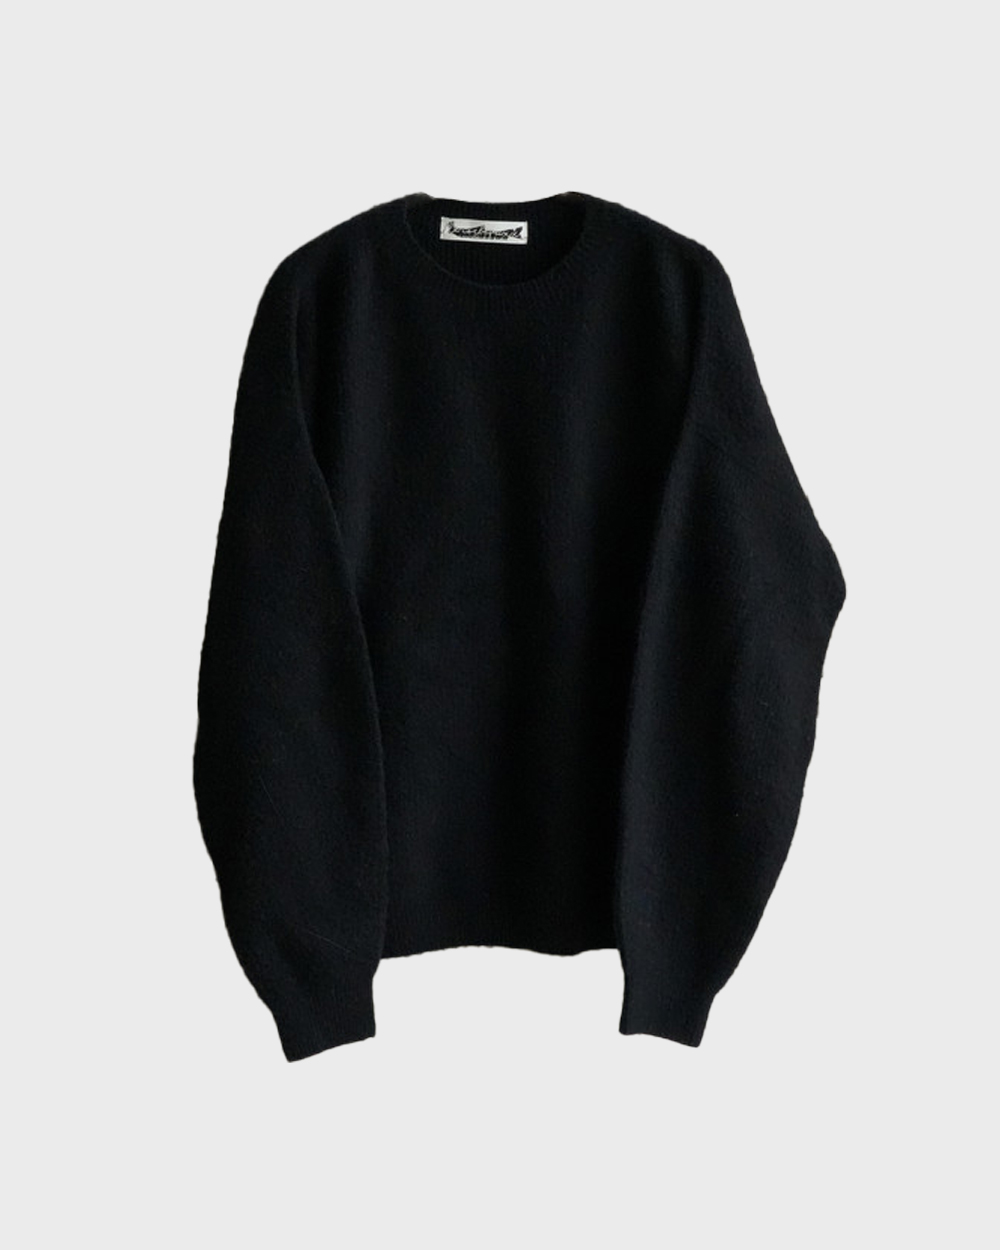 LCBX Brancusi sweater_3D knitting (Black)